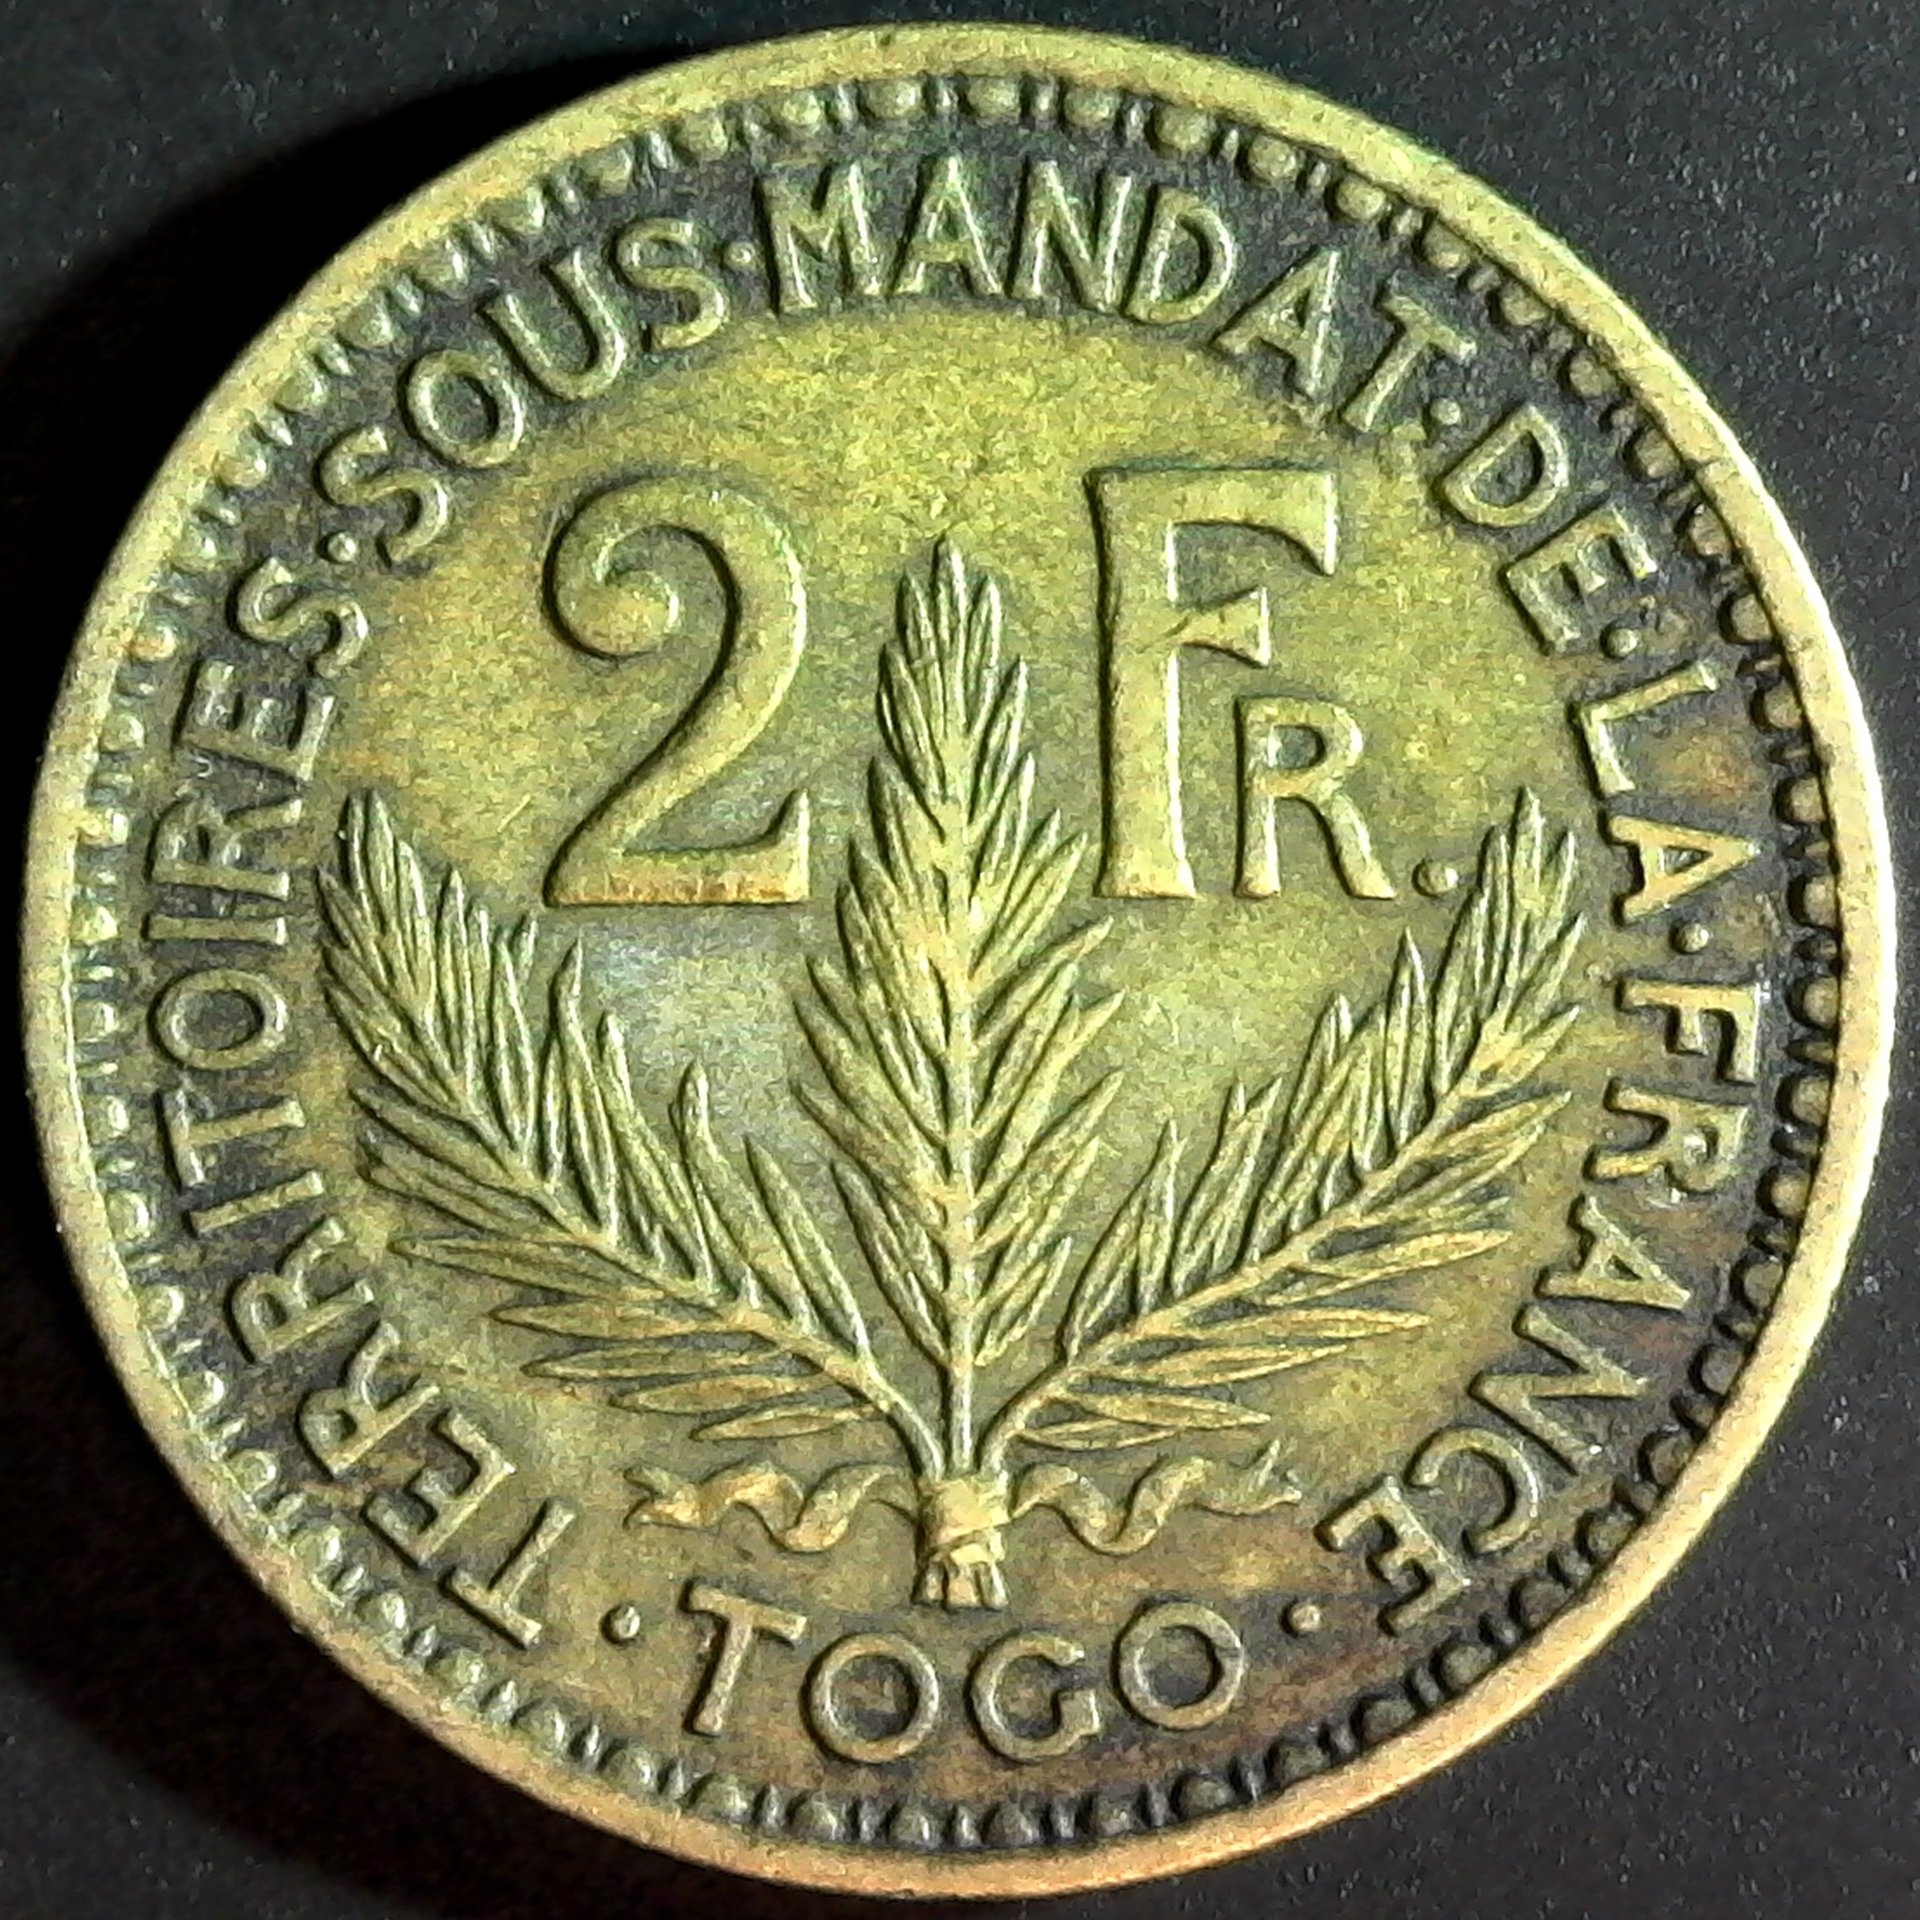 Togo 2 Francs 1924 obv.jpg